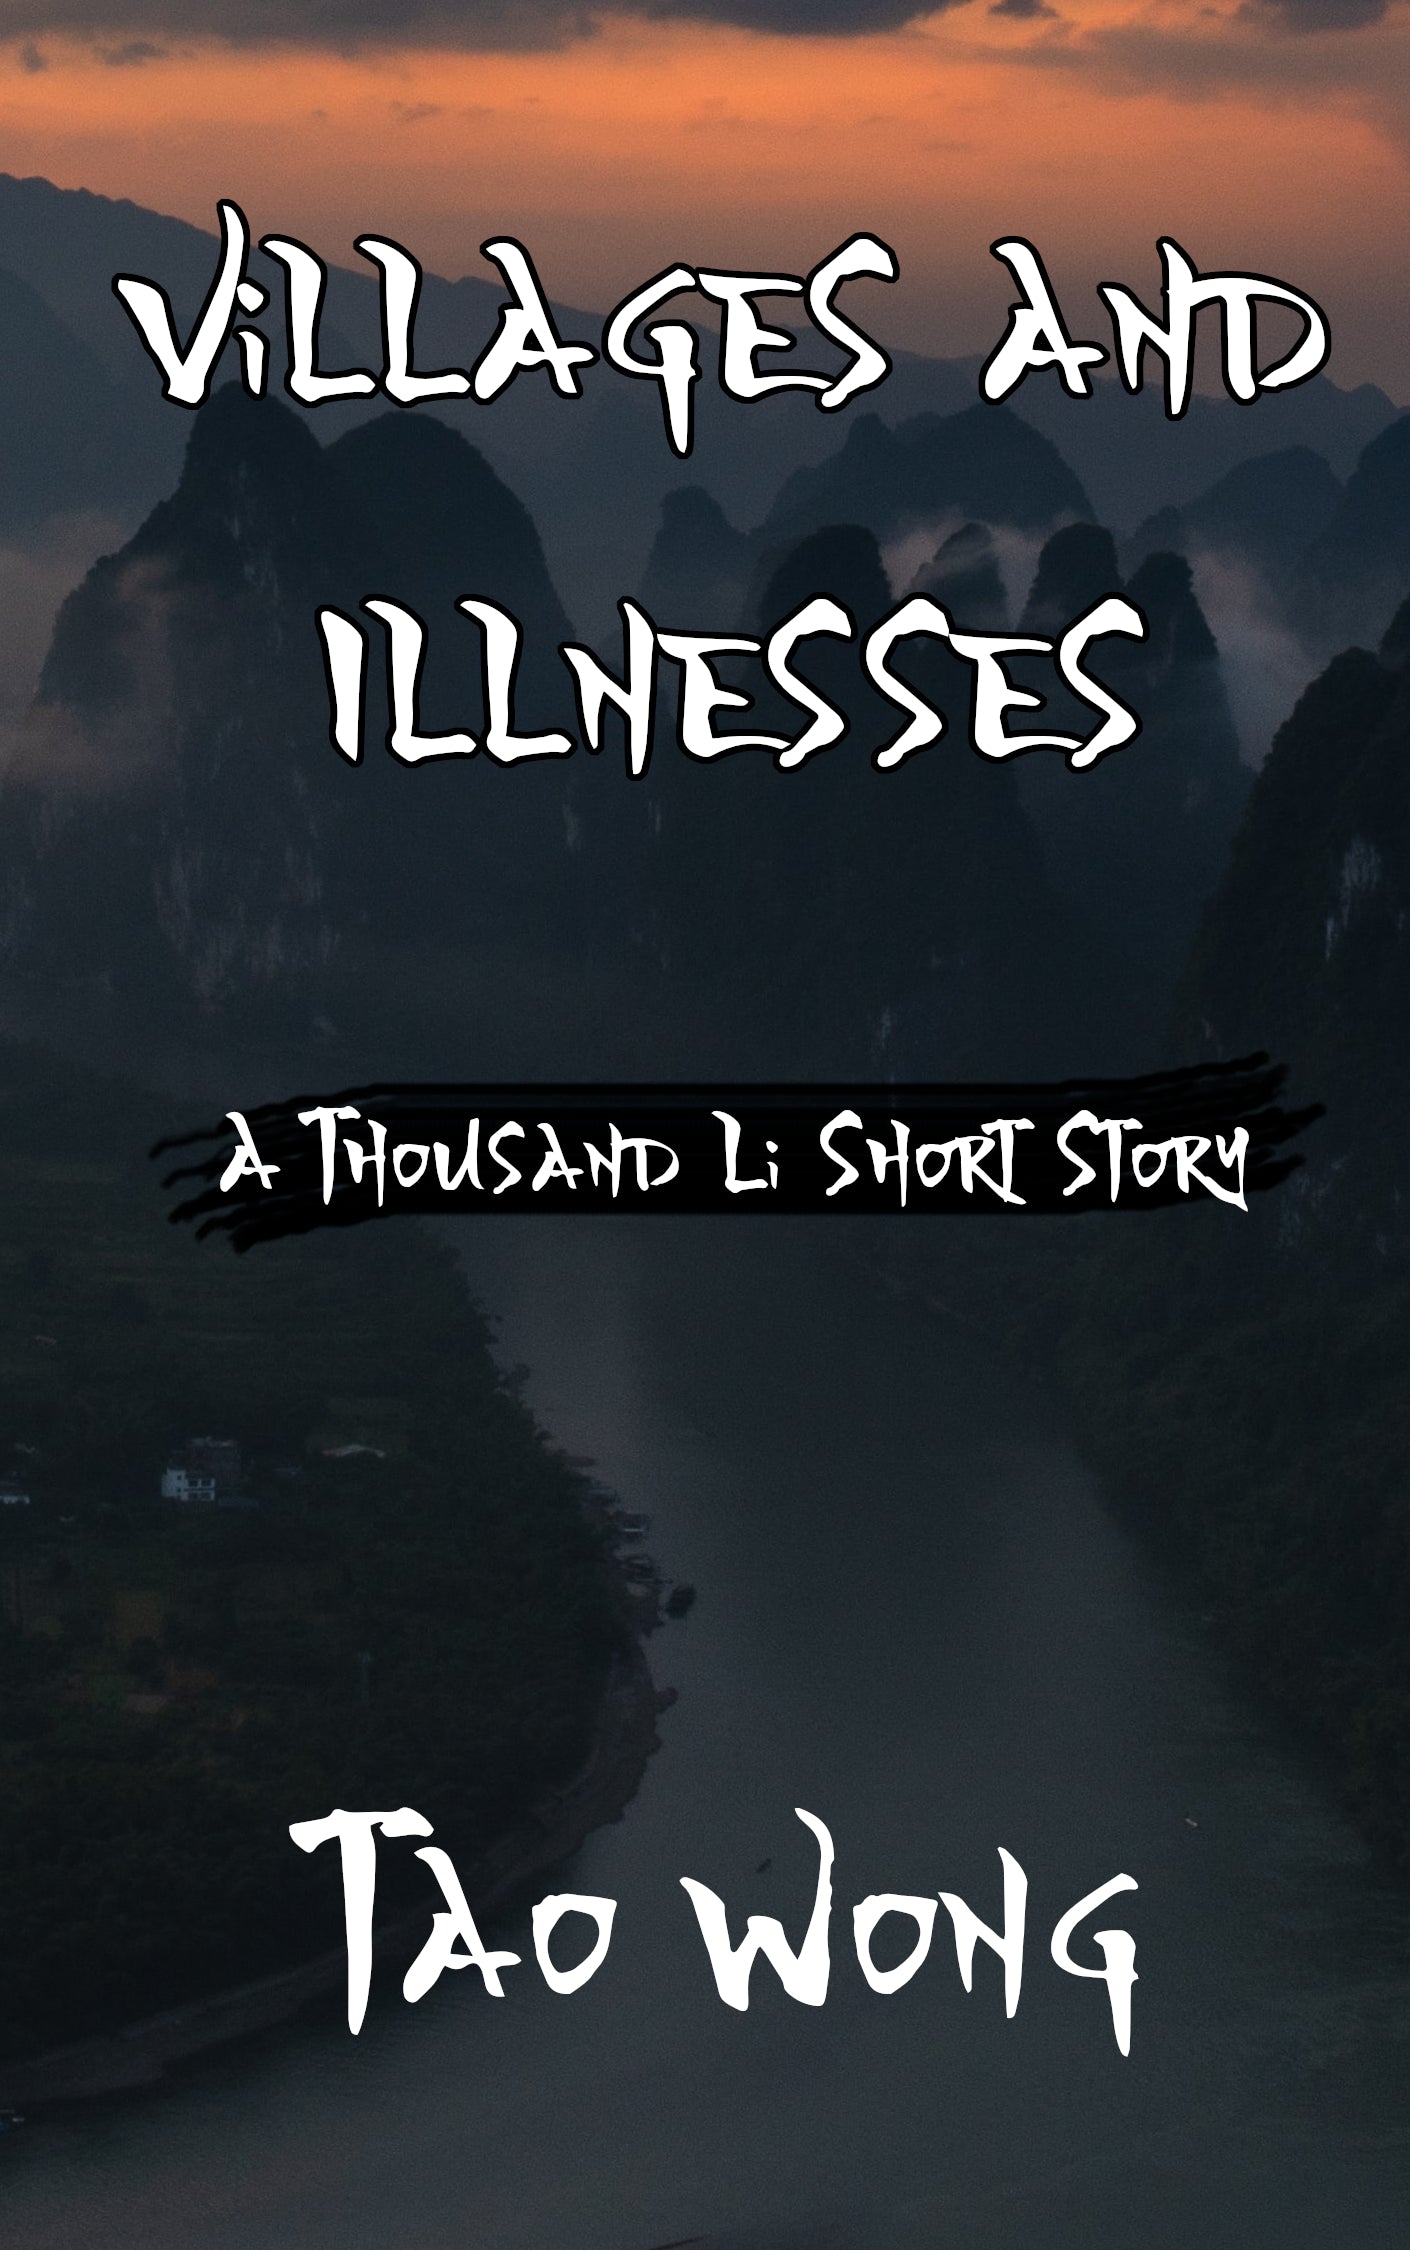 Villages and Illnesses (An A Thousand Li Short Story)